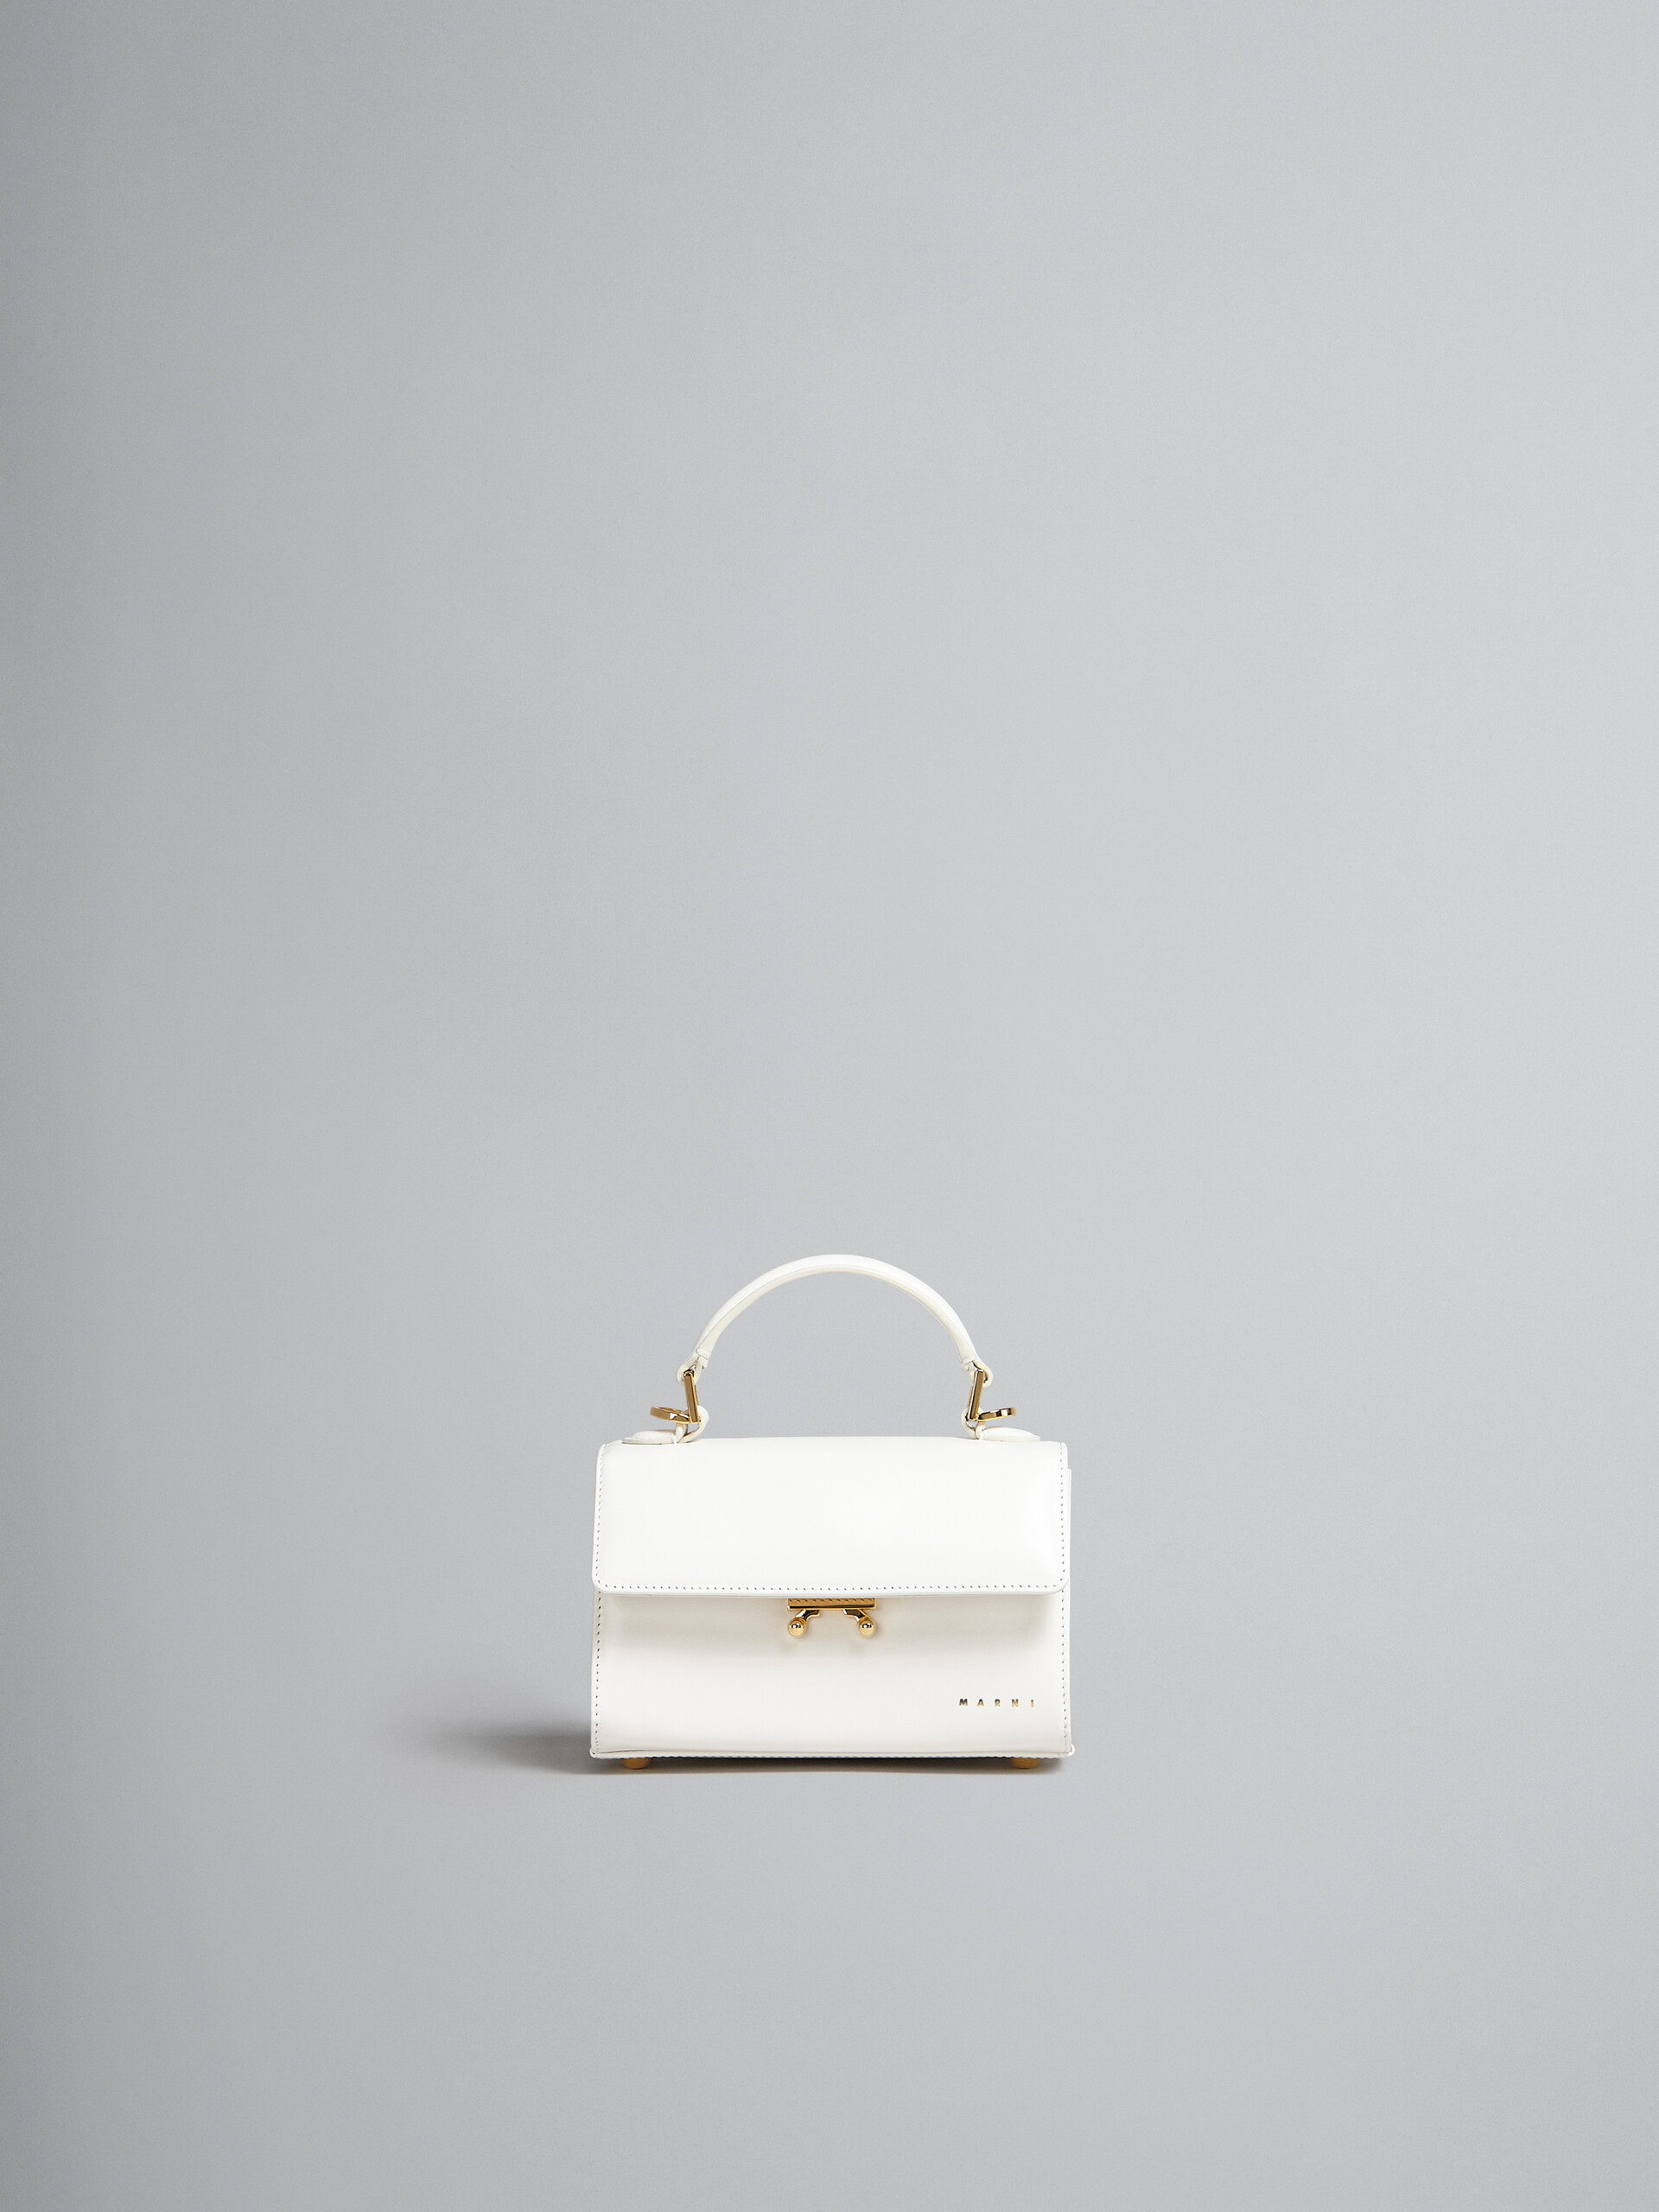 Relativity Mini Bag in white leather - Handbag - Image 1